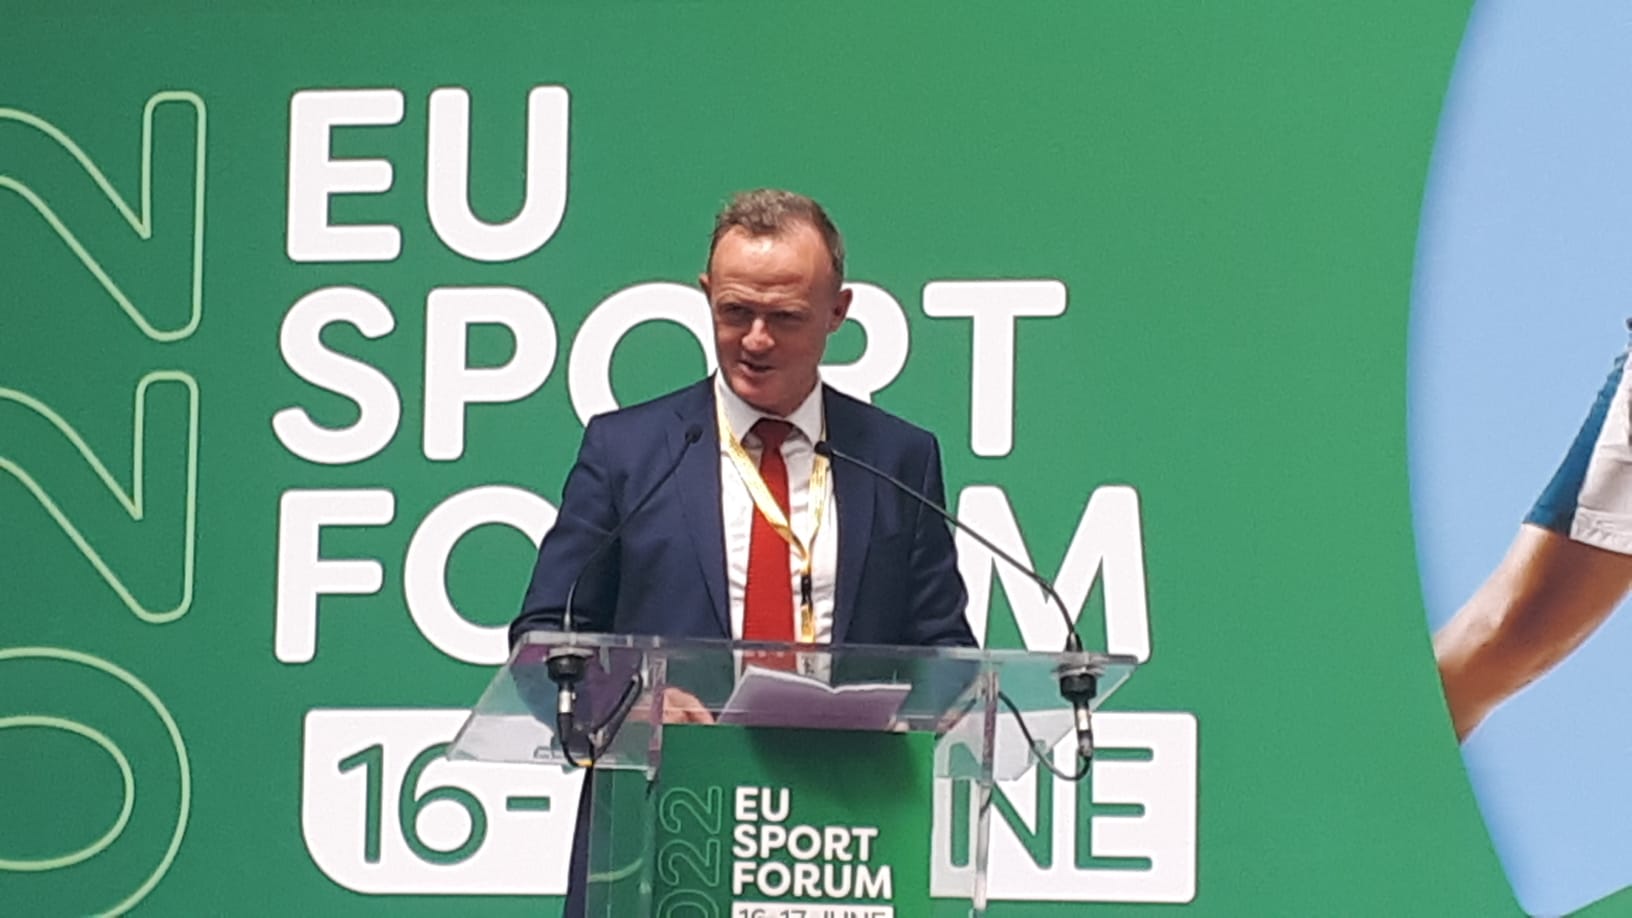 LP at the EU Sport Forum 2022